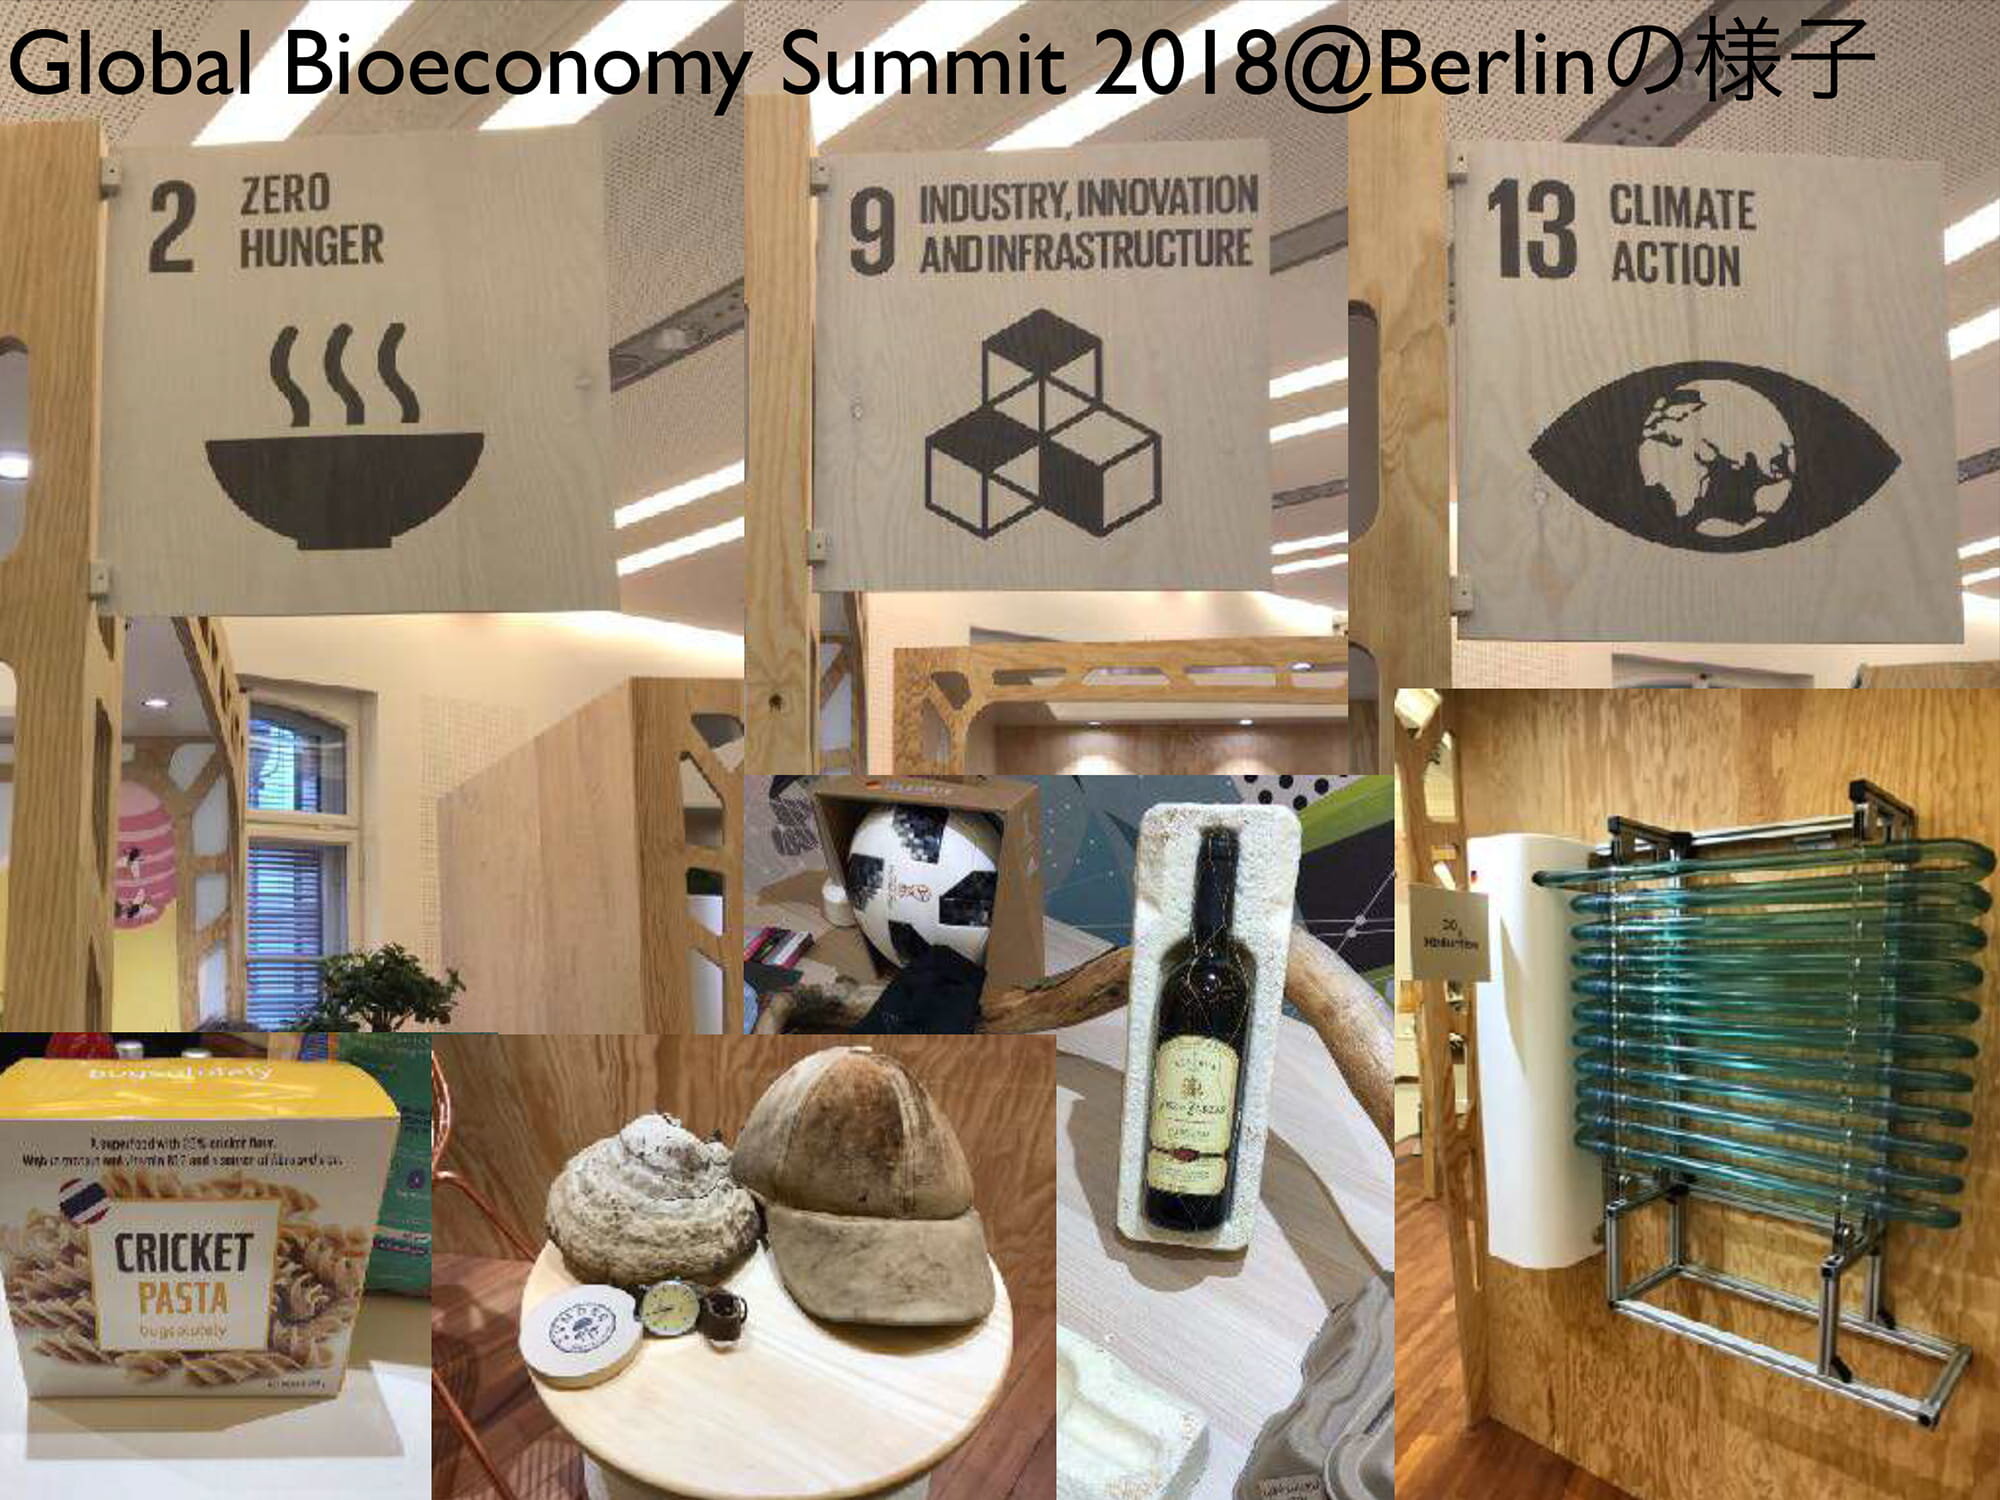 Global Bioeconomy Summit 2018@Berlinの様子